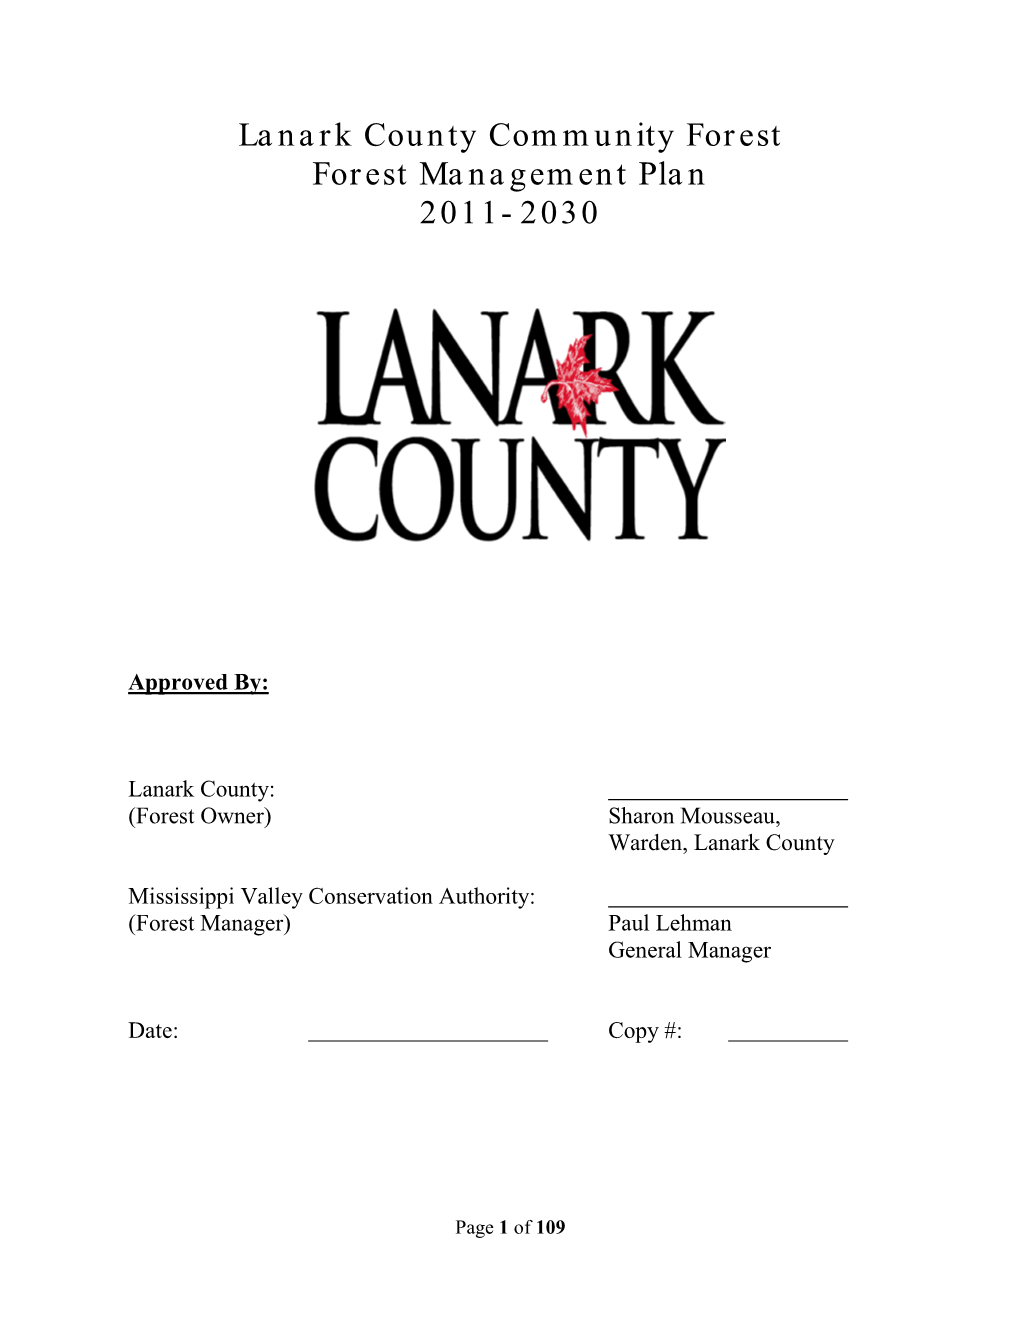 Lanark County Community Forest Forest Management Plan 2011-2030